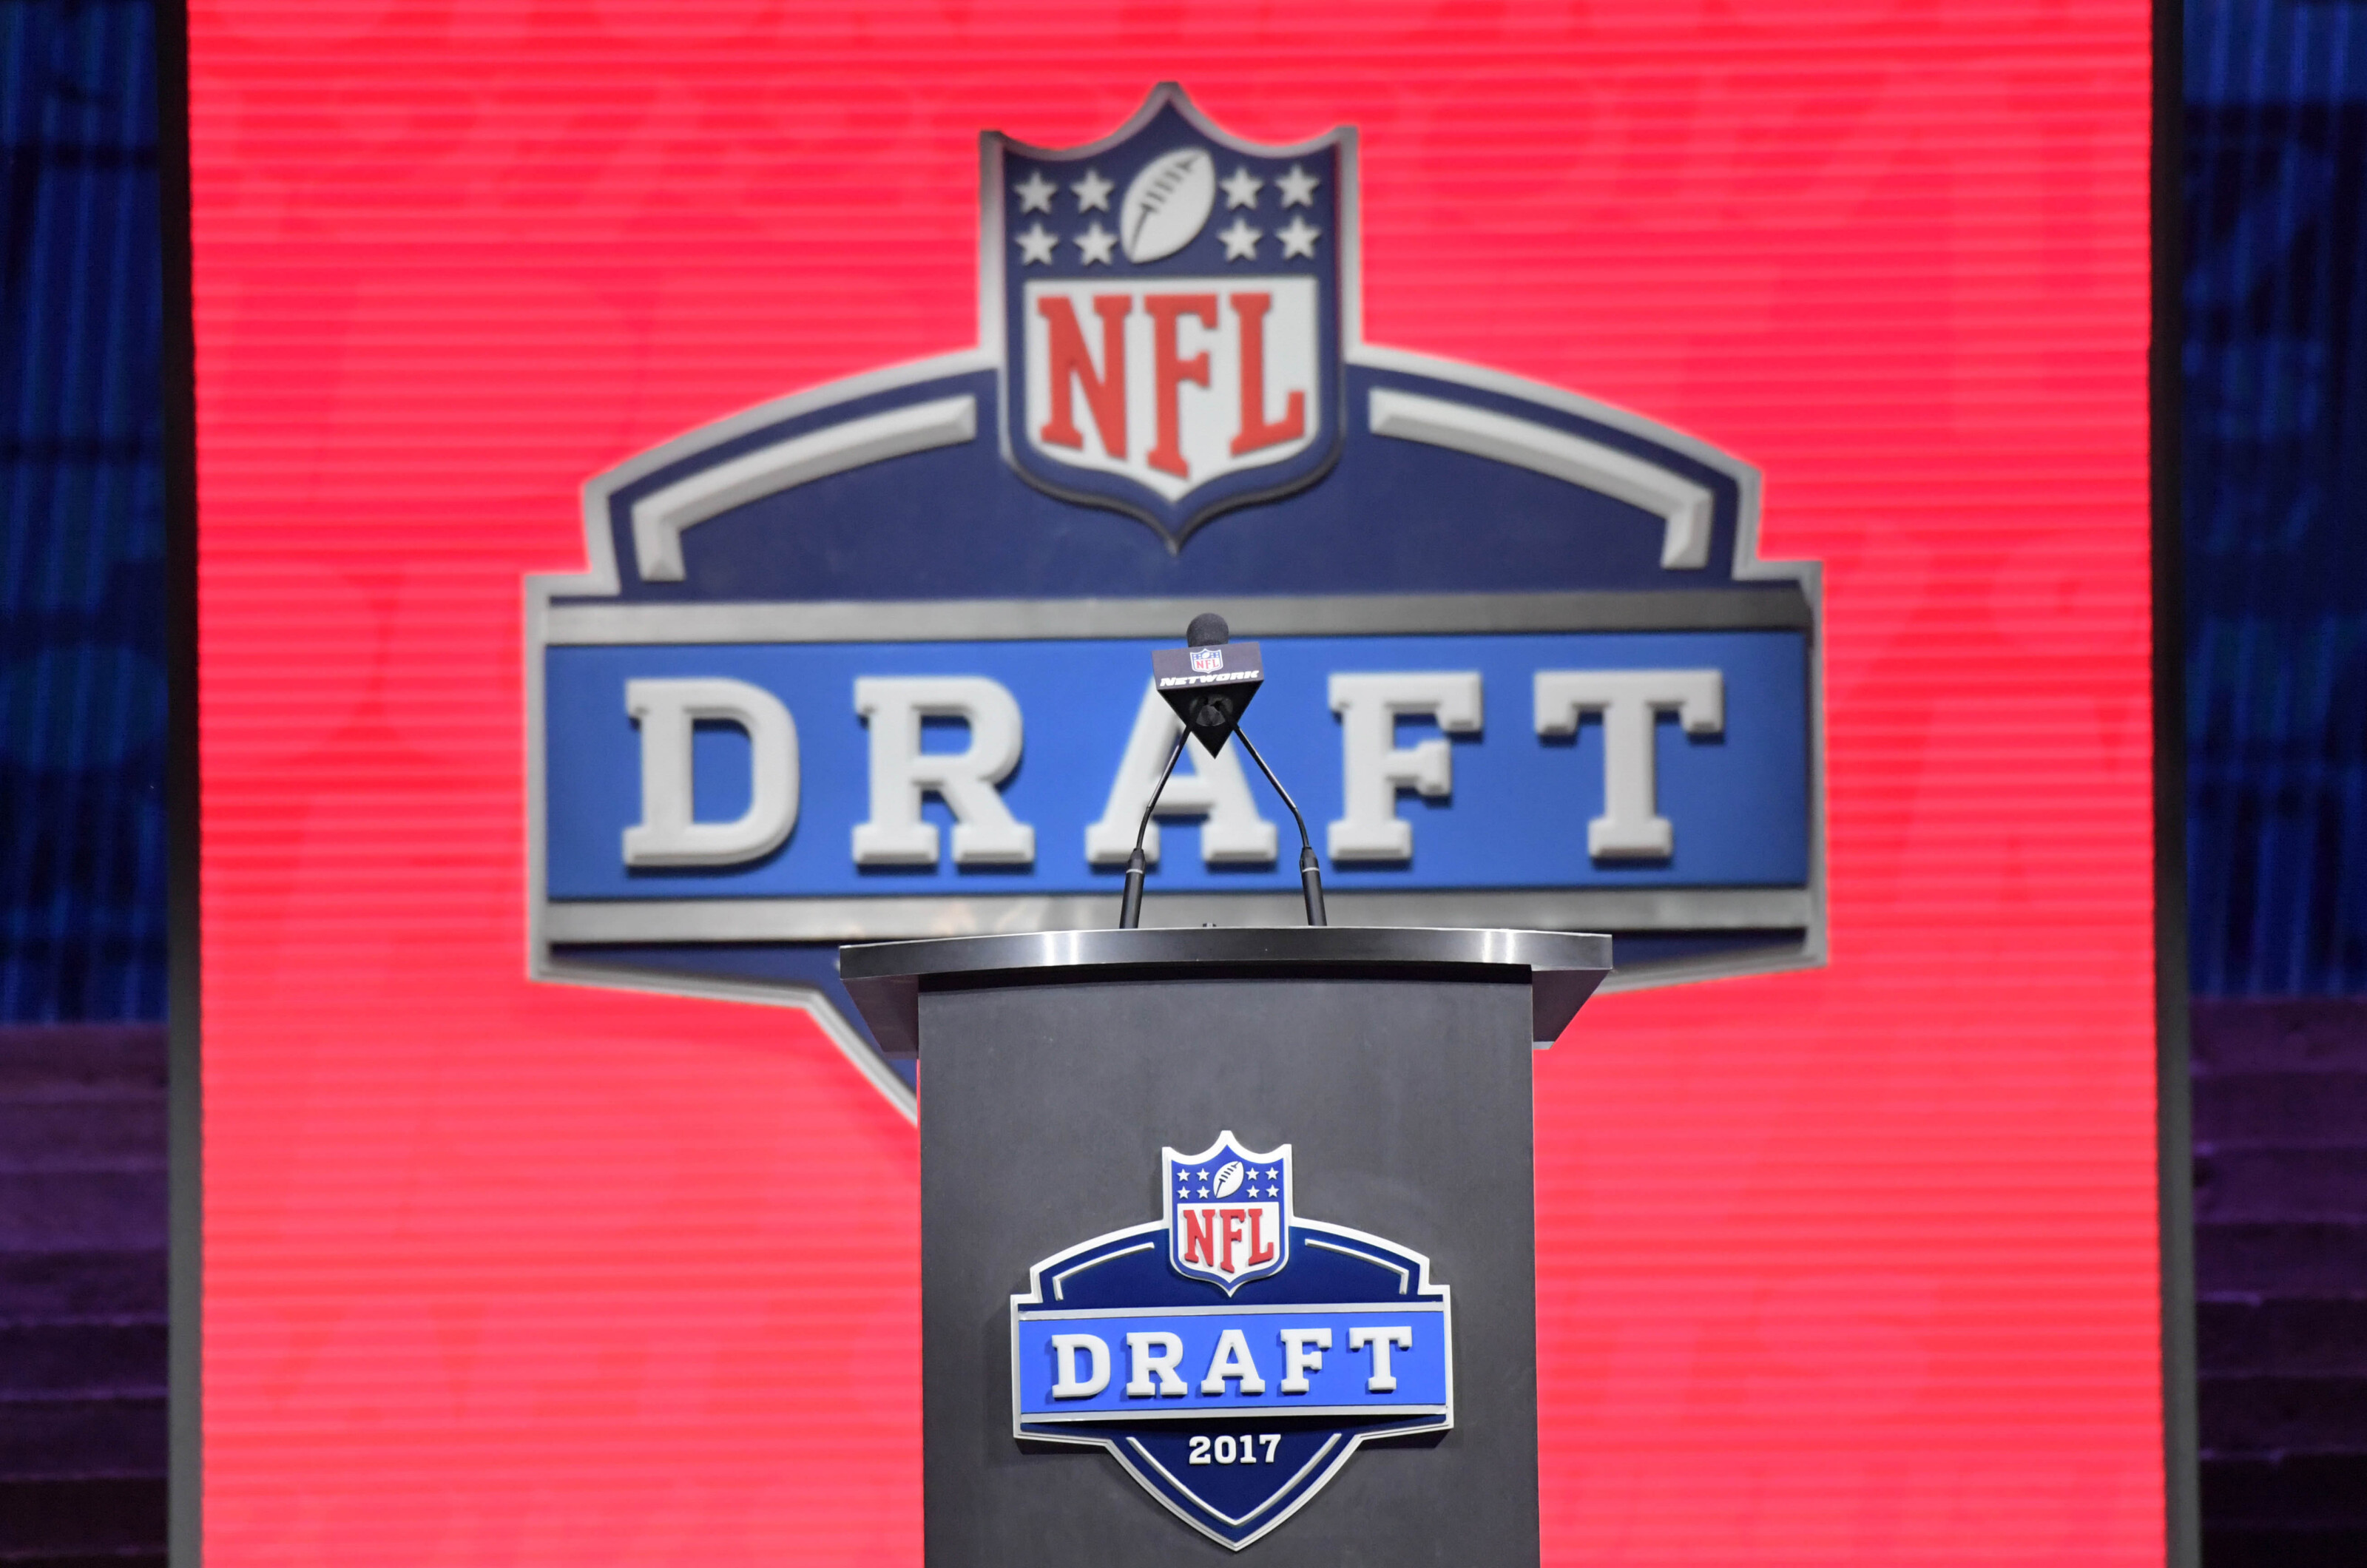 Alabama Football: Crimson Tide to set new NFL Draft record